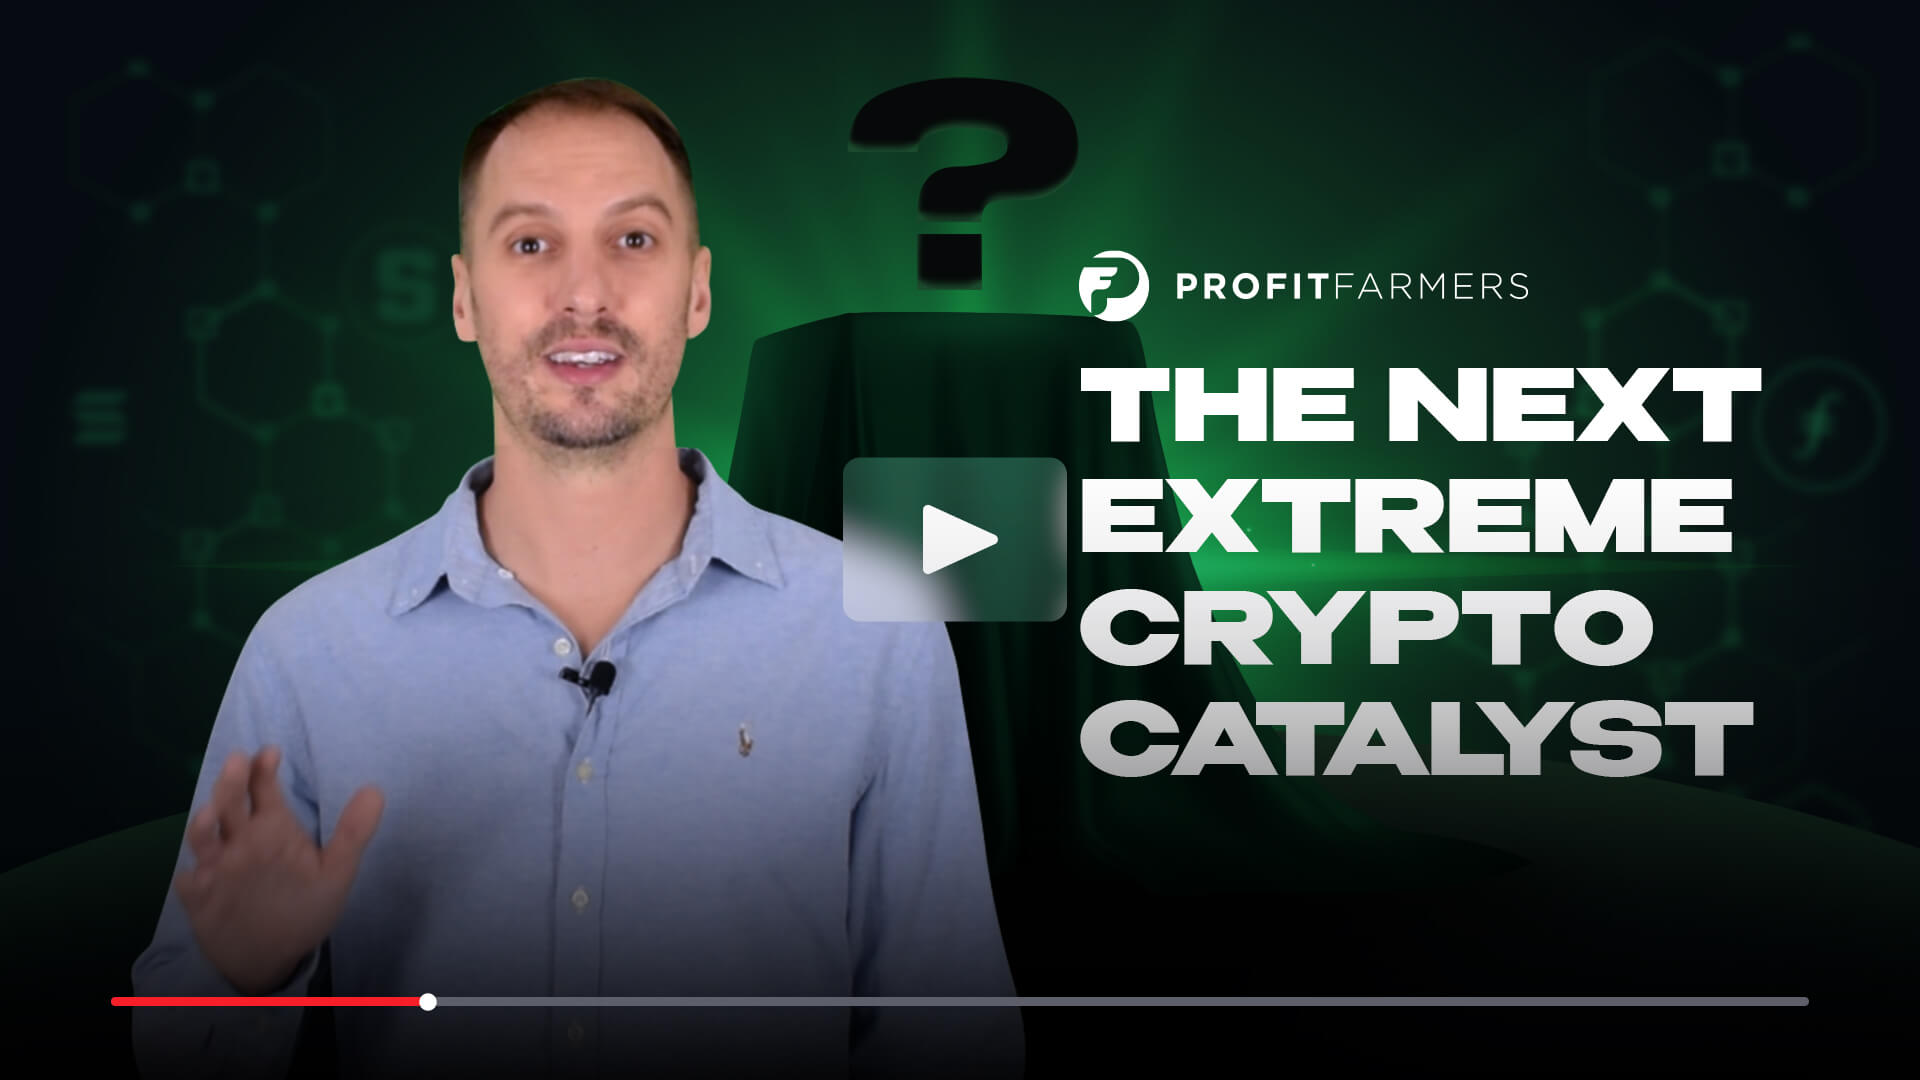 Matthew explaining the next crypto catalyst